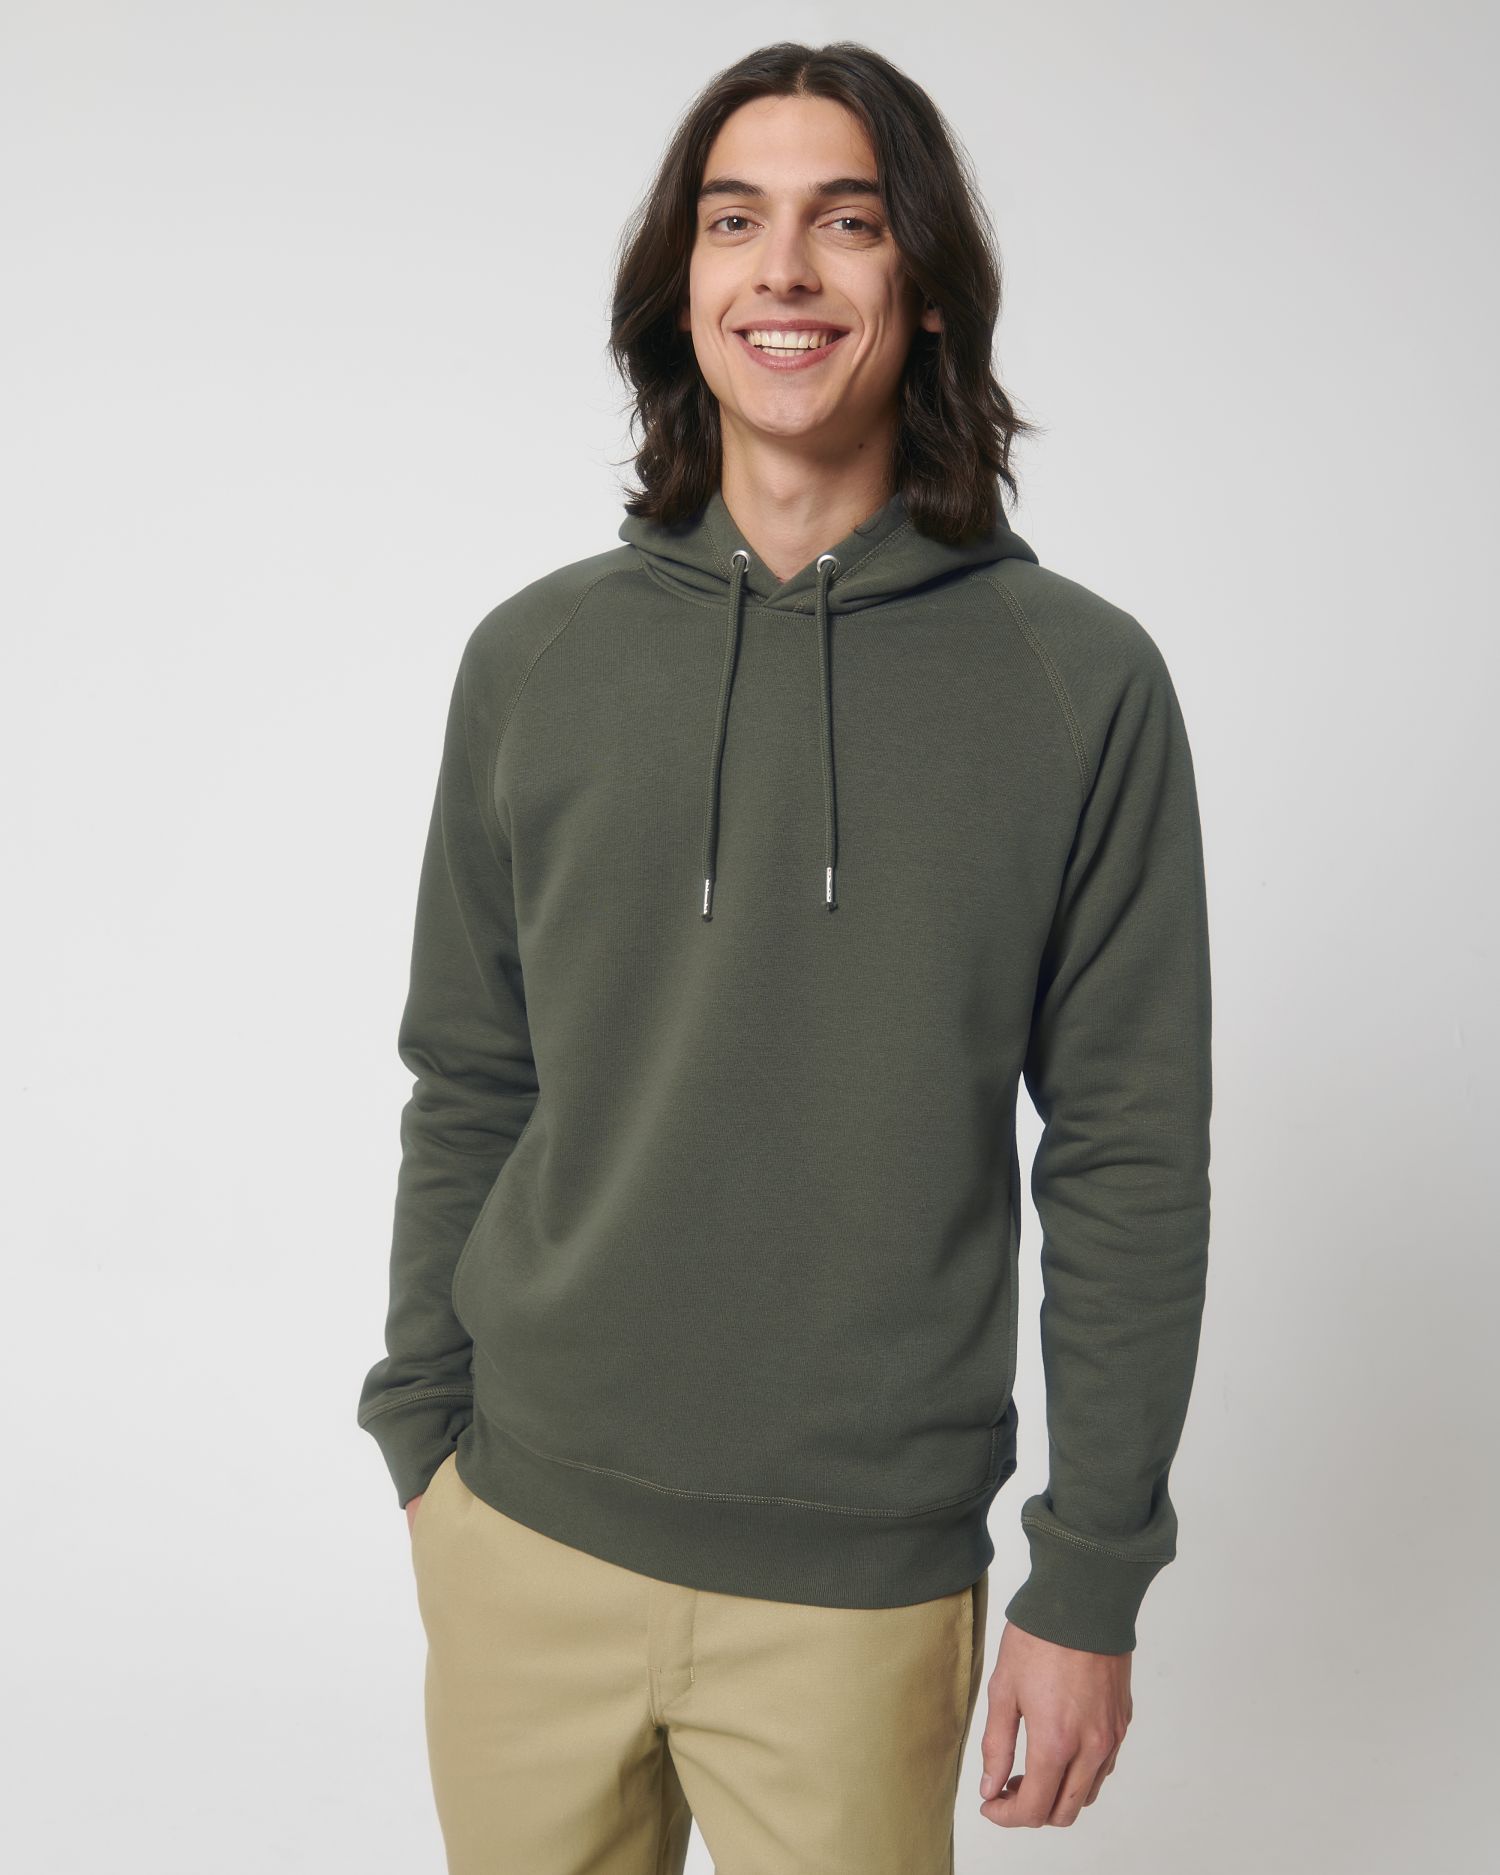 Hoodie sweatshirts Sider in Farbe Khaki